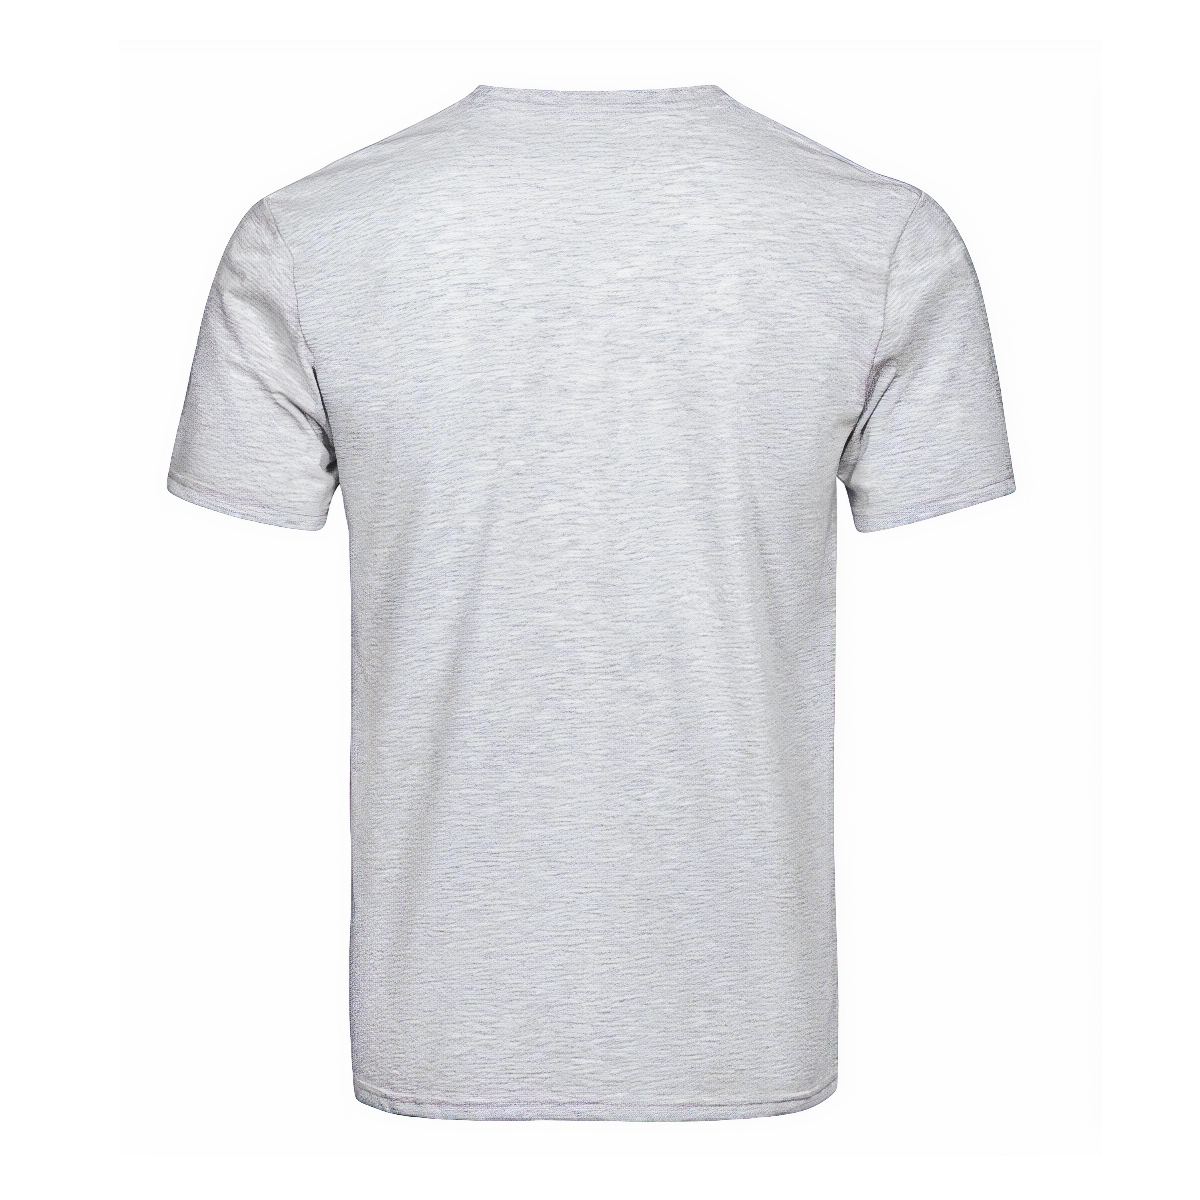 Allardice Tartan Crest T-shirt - I'm not yelling style